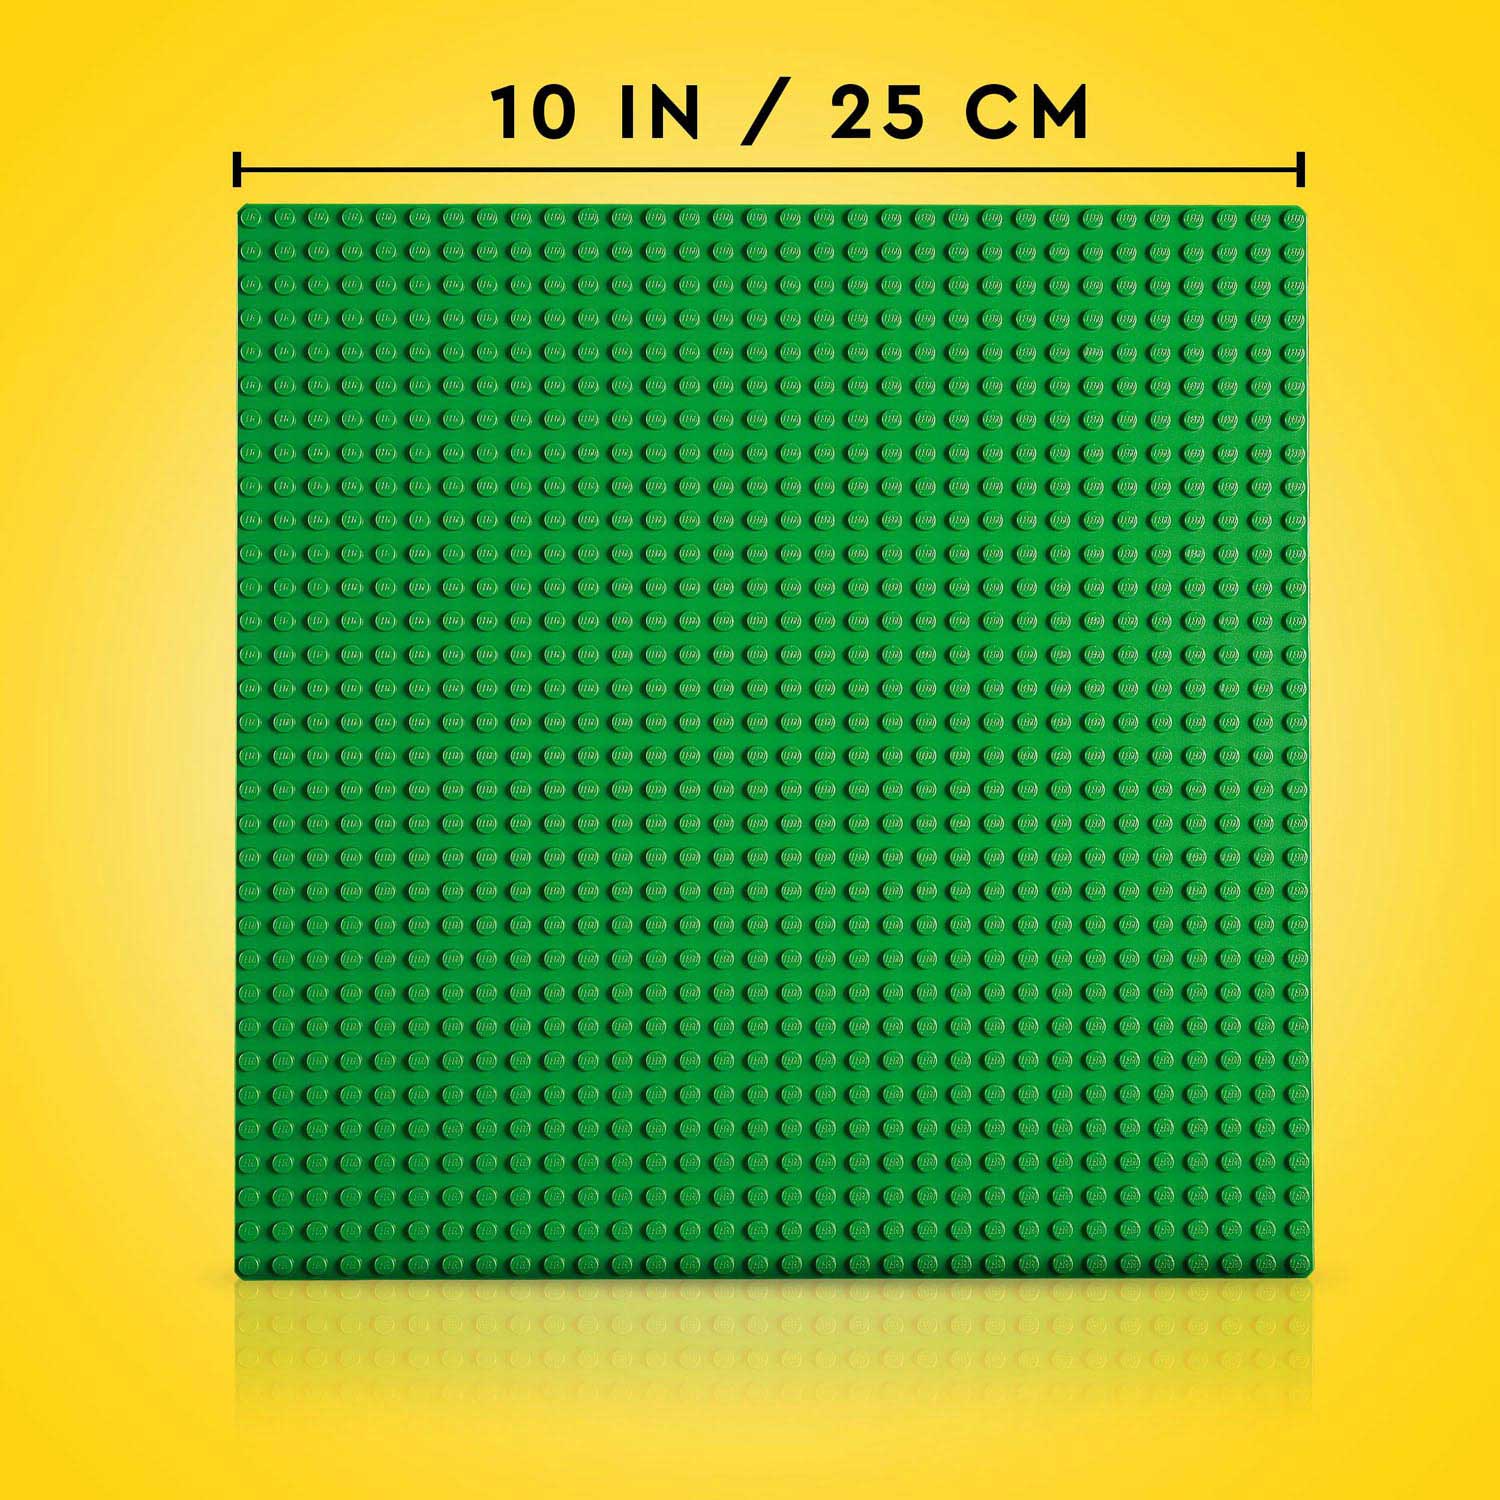 LEGO Classic 11023 Plaque de construction verte